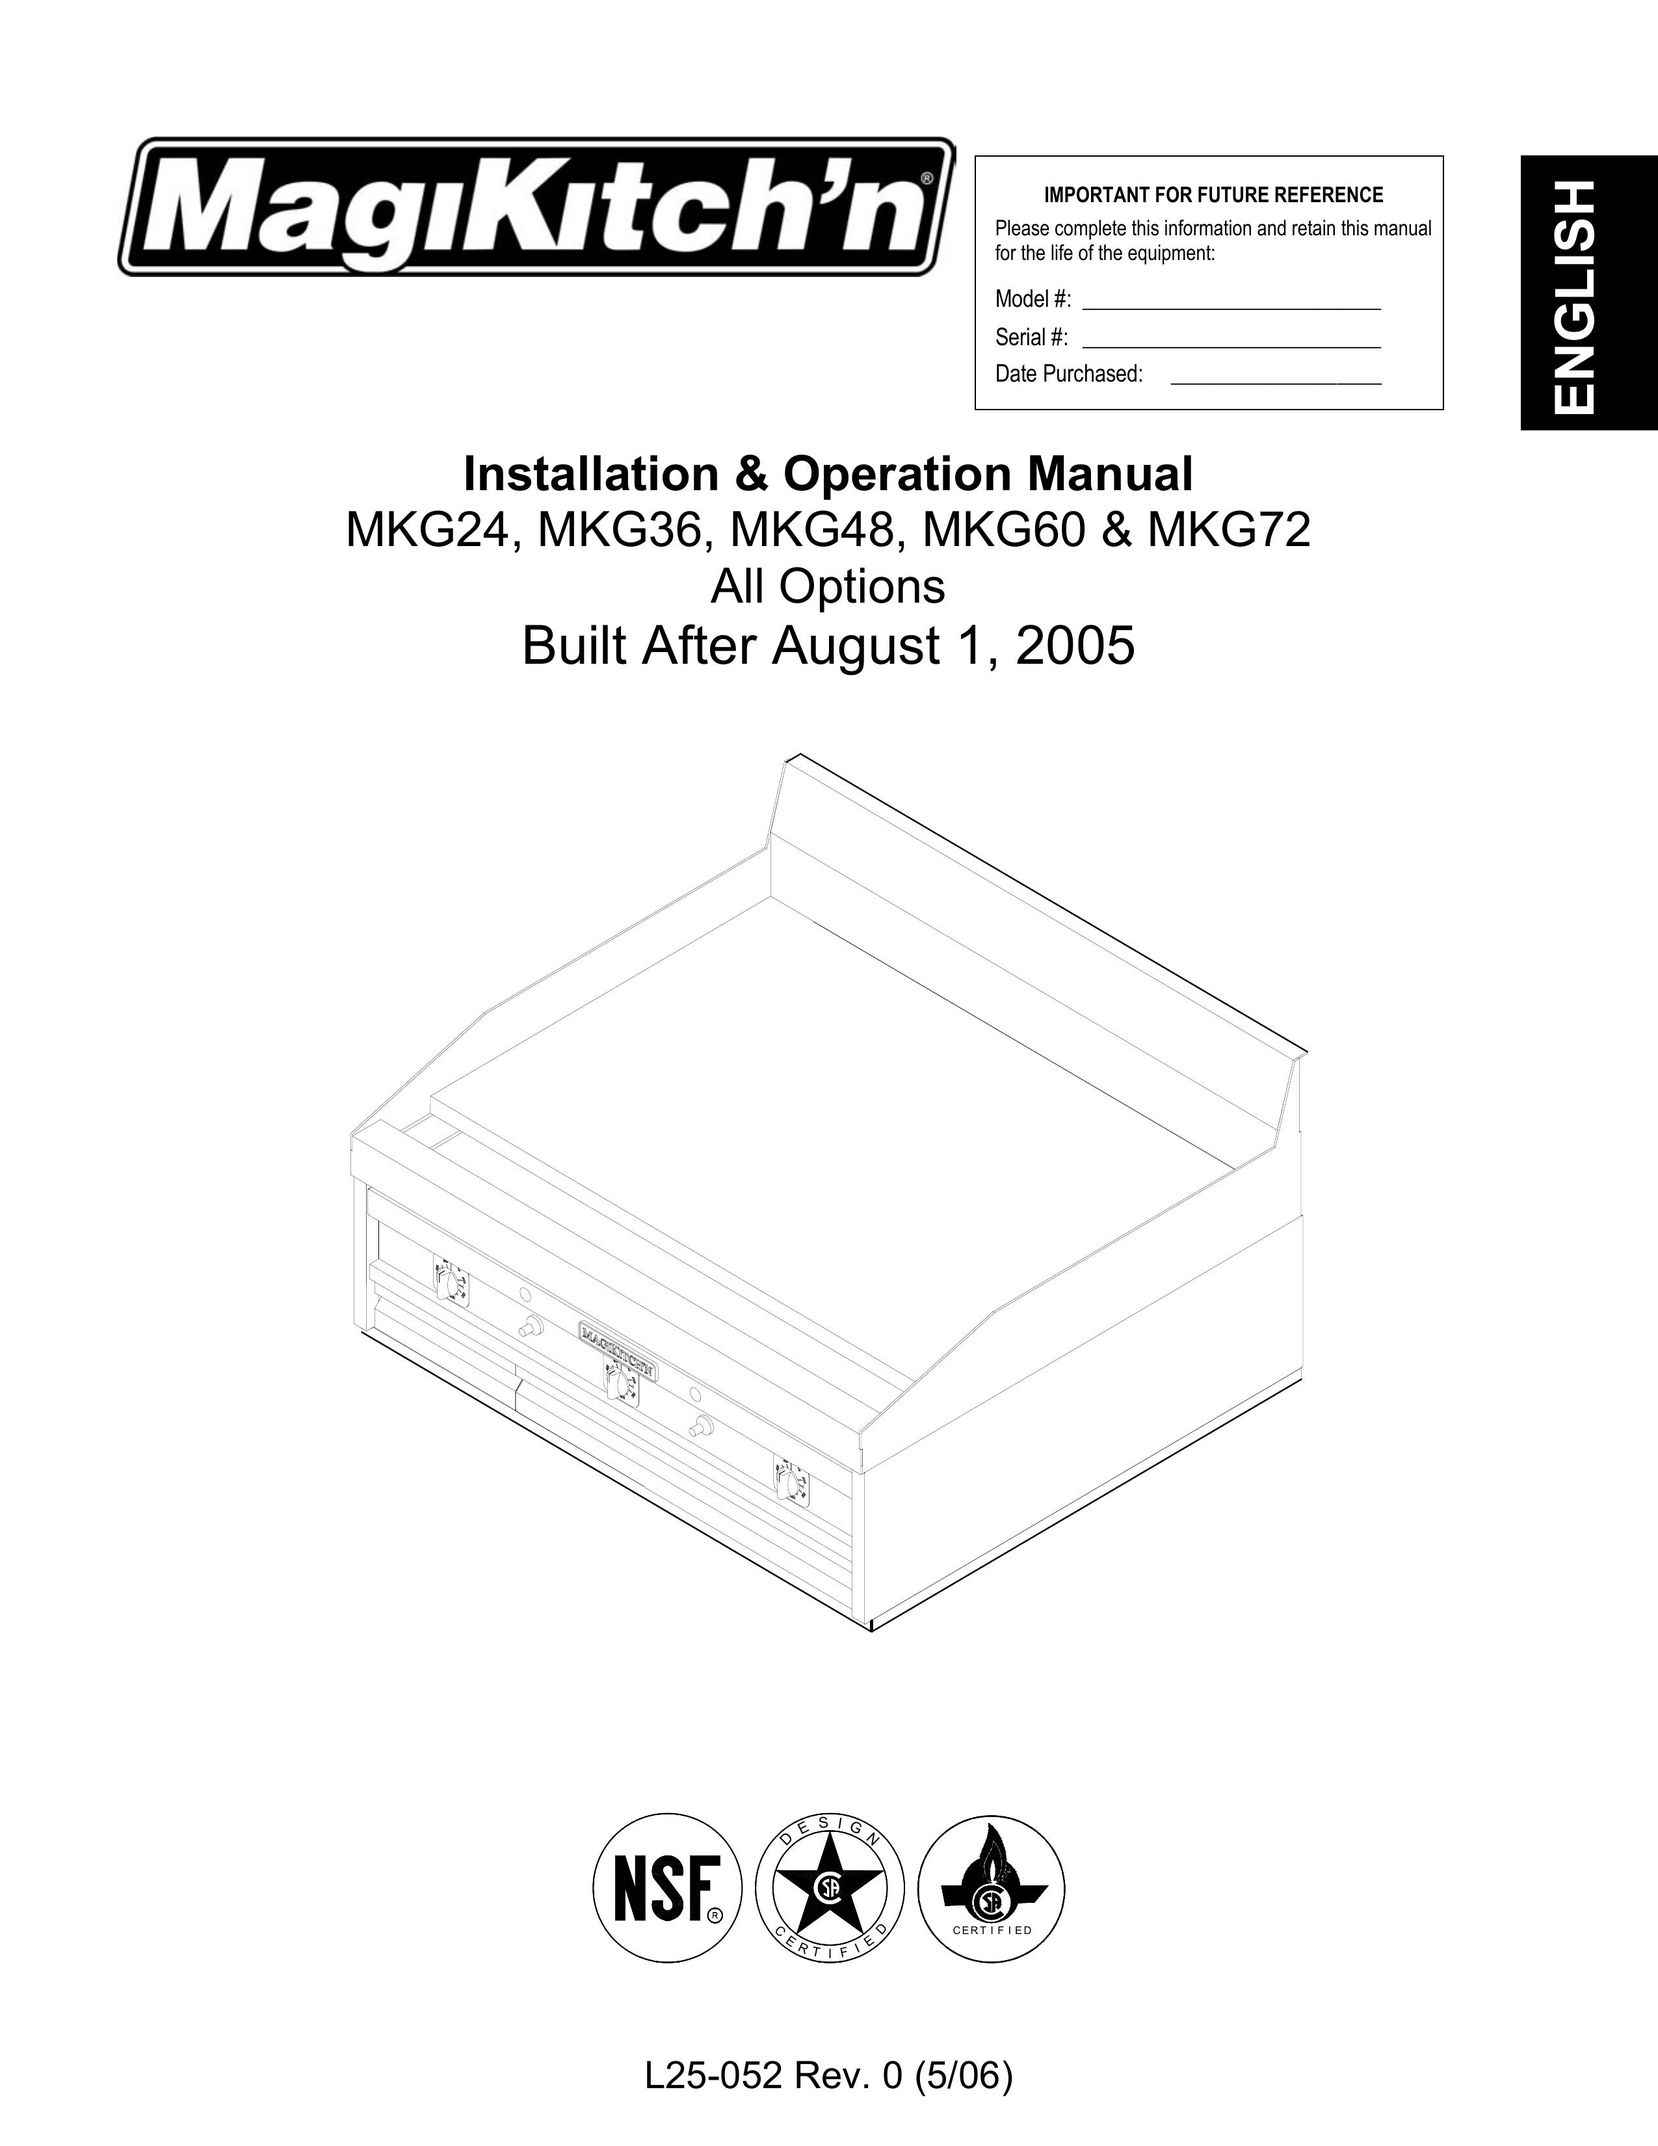 Magikitch'n MKG24 Griddle User Manual